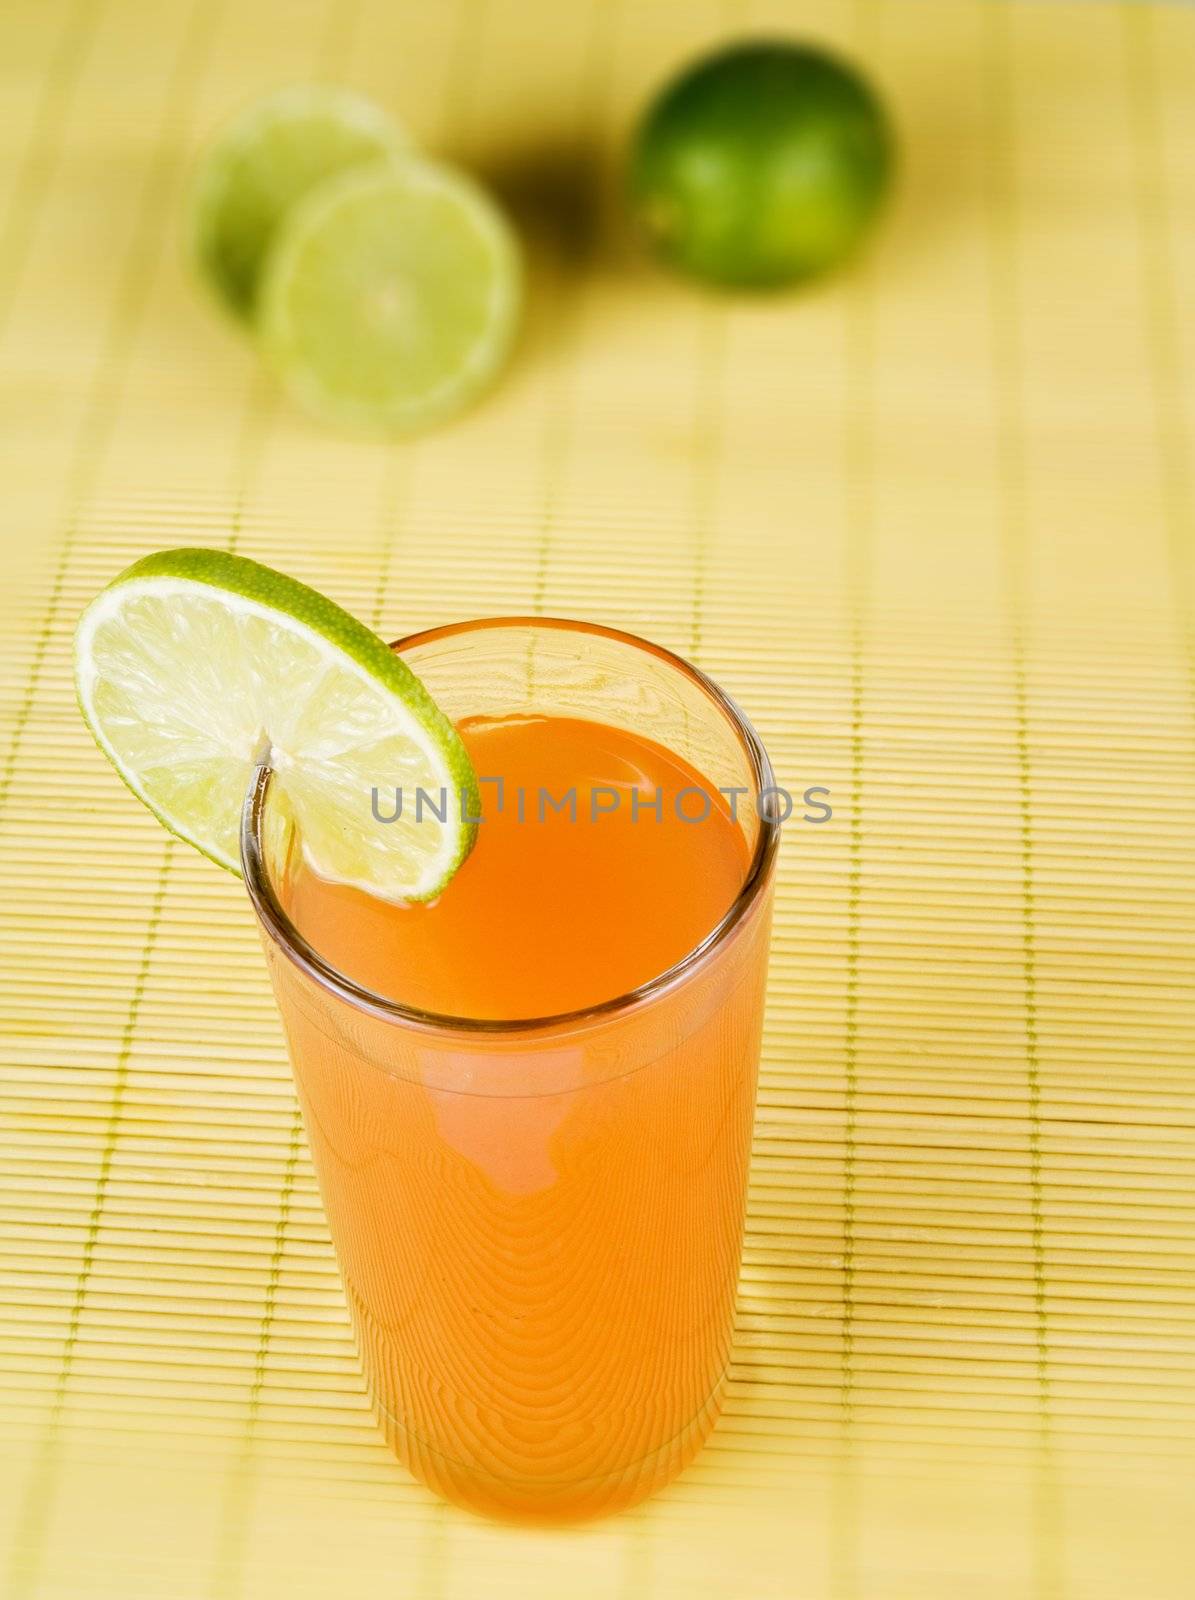 Orange juice with a lime slice